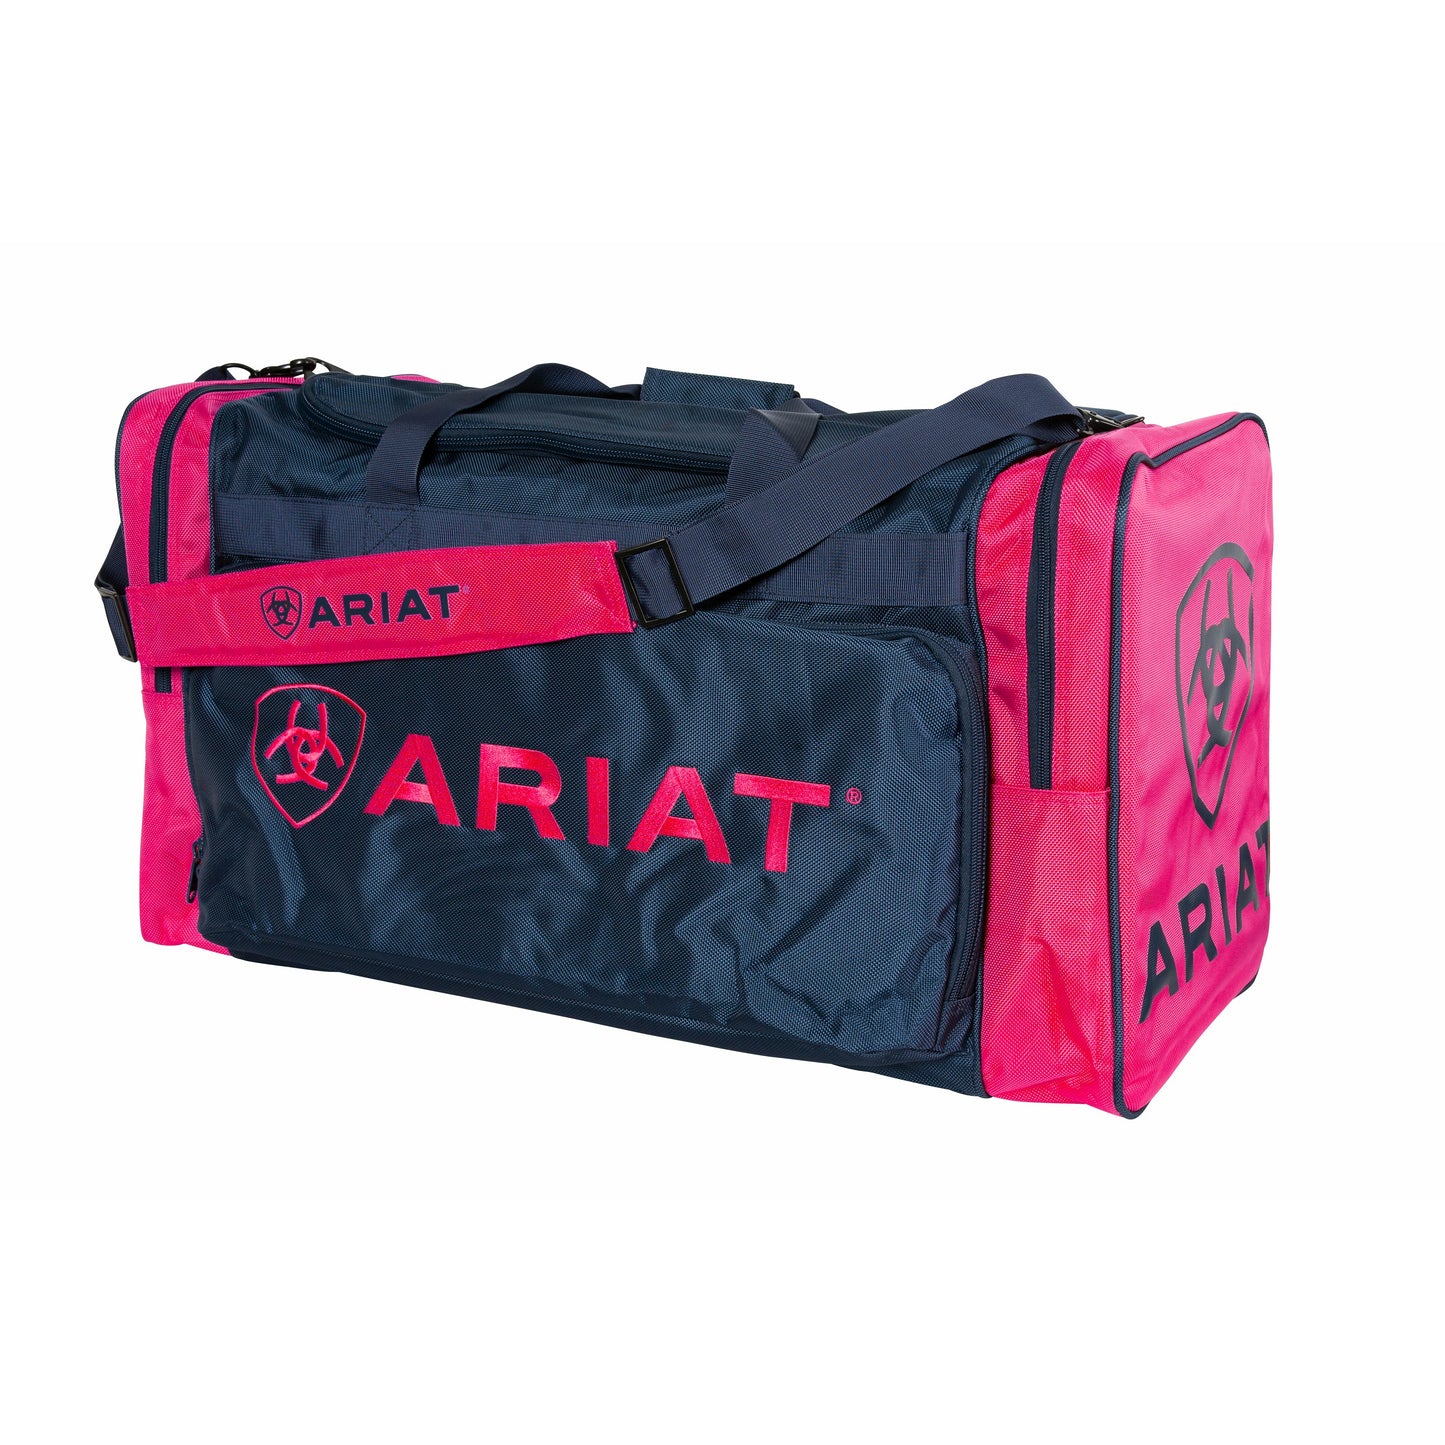 Ariat Gear Bag Pink/Navy